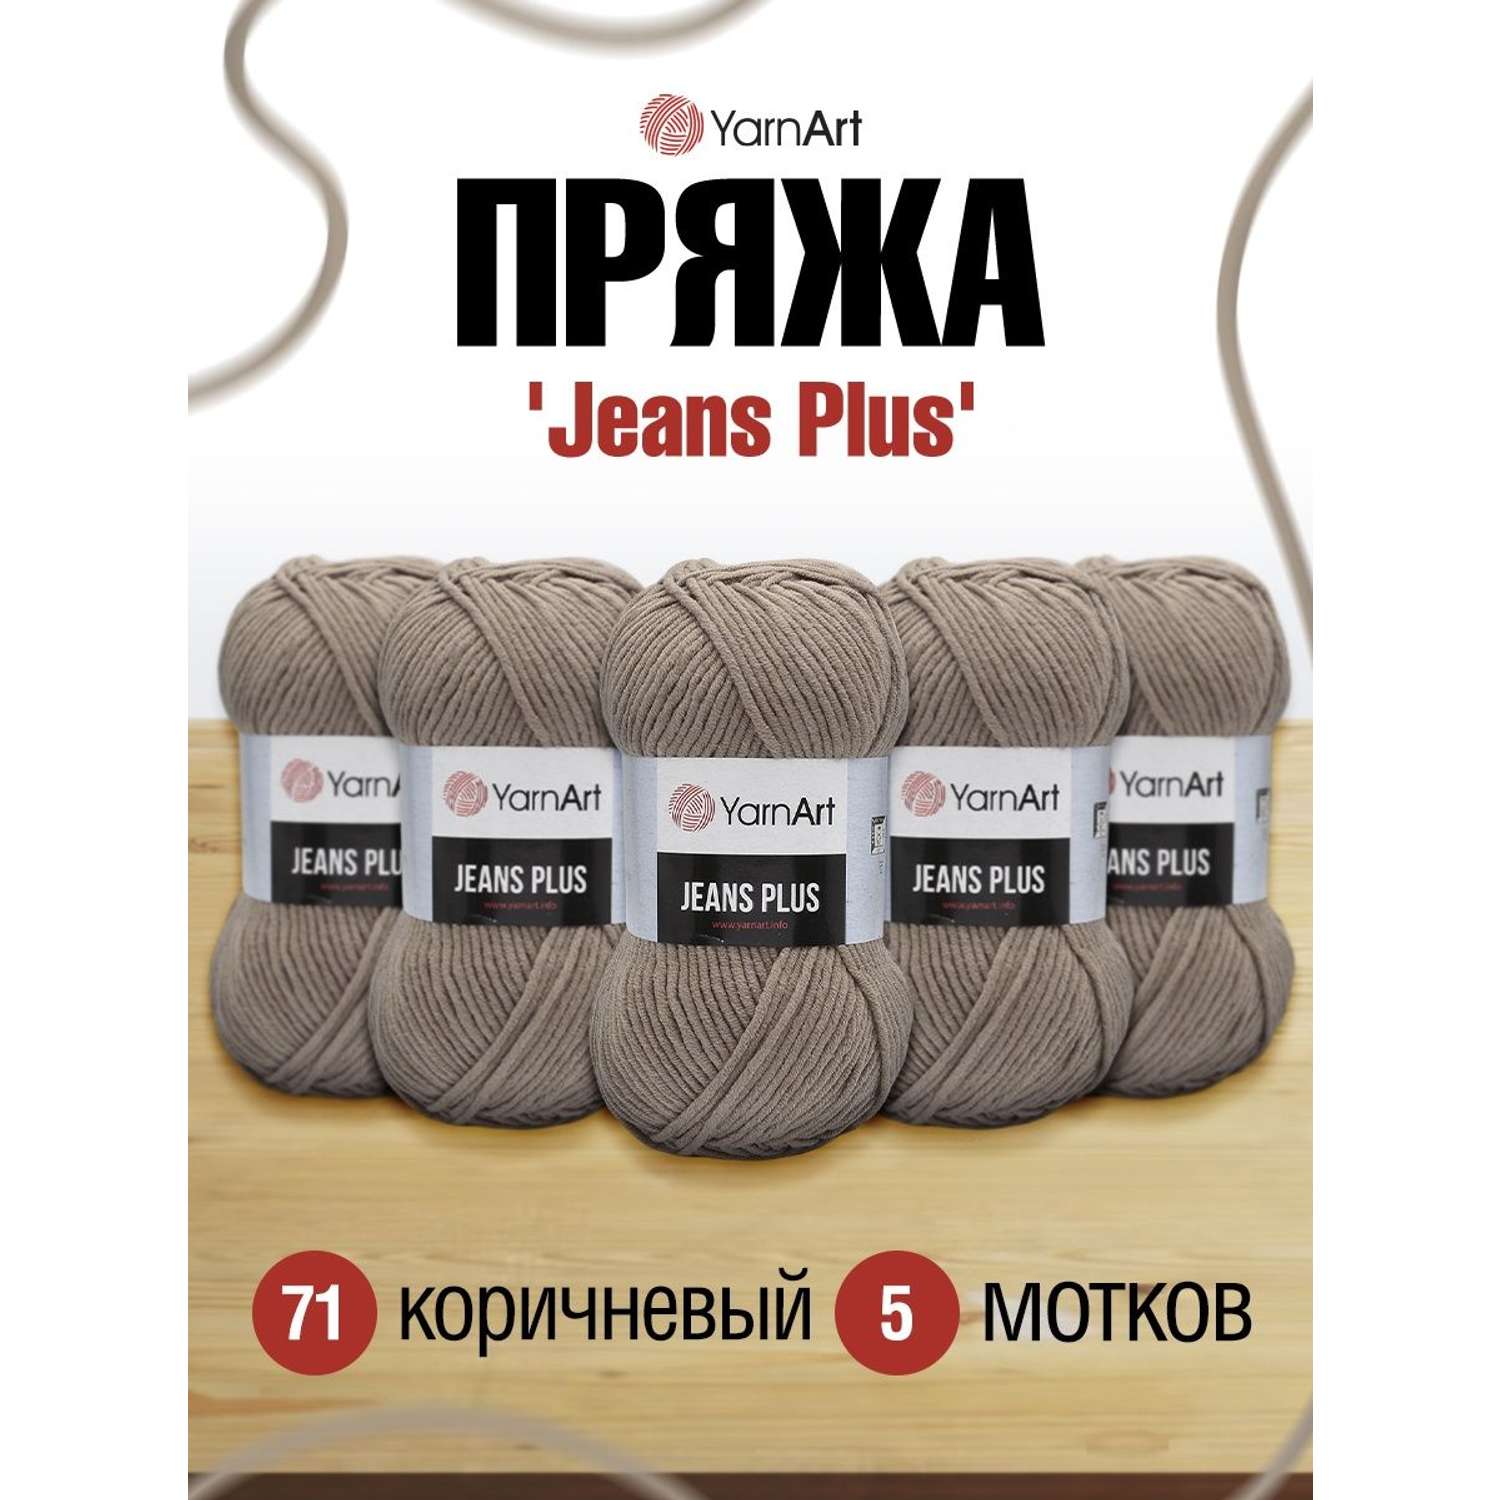 Пряжа YarnArt Jeans Plus объемная летняя 100 г 160 м 71 коричневый 5 мотков - фото 1